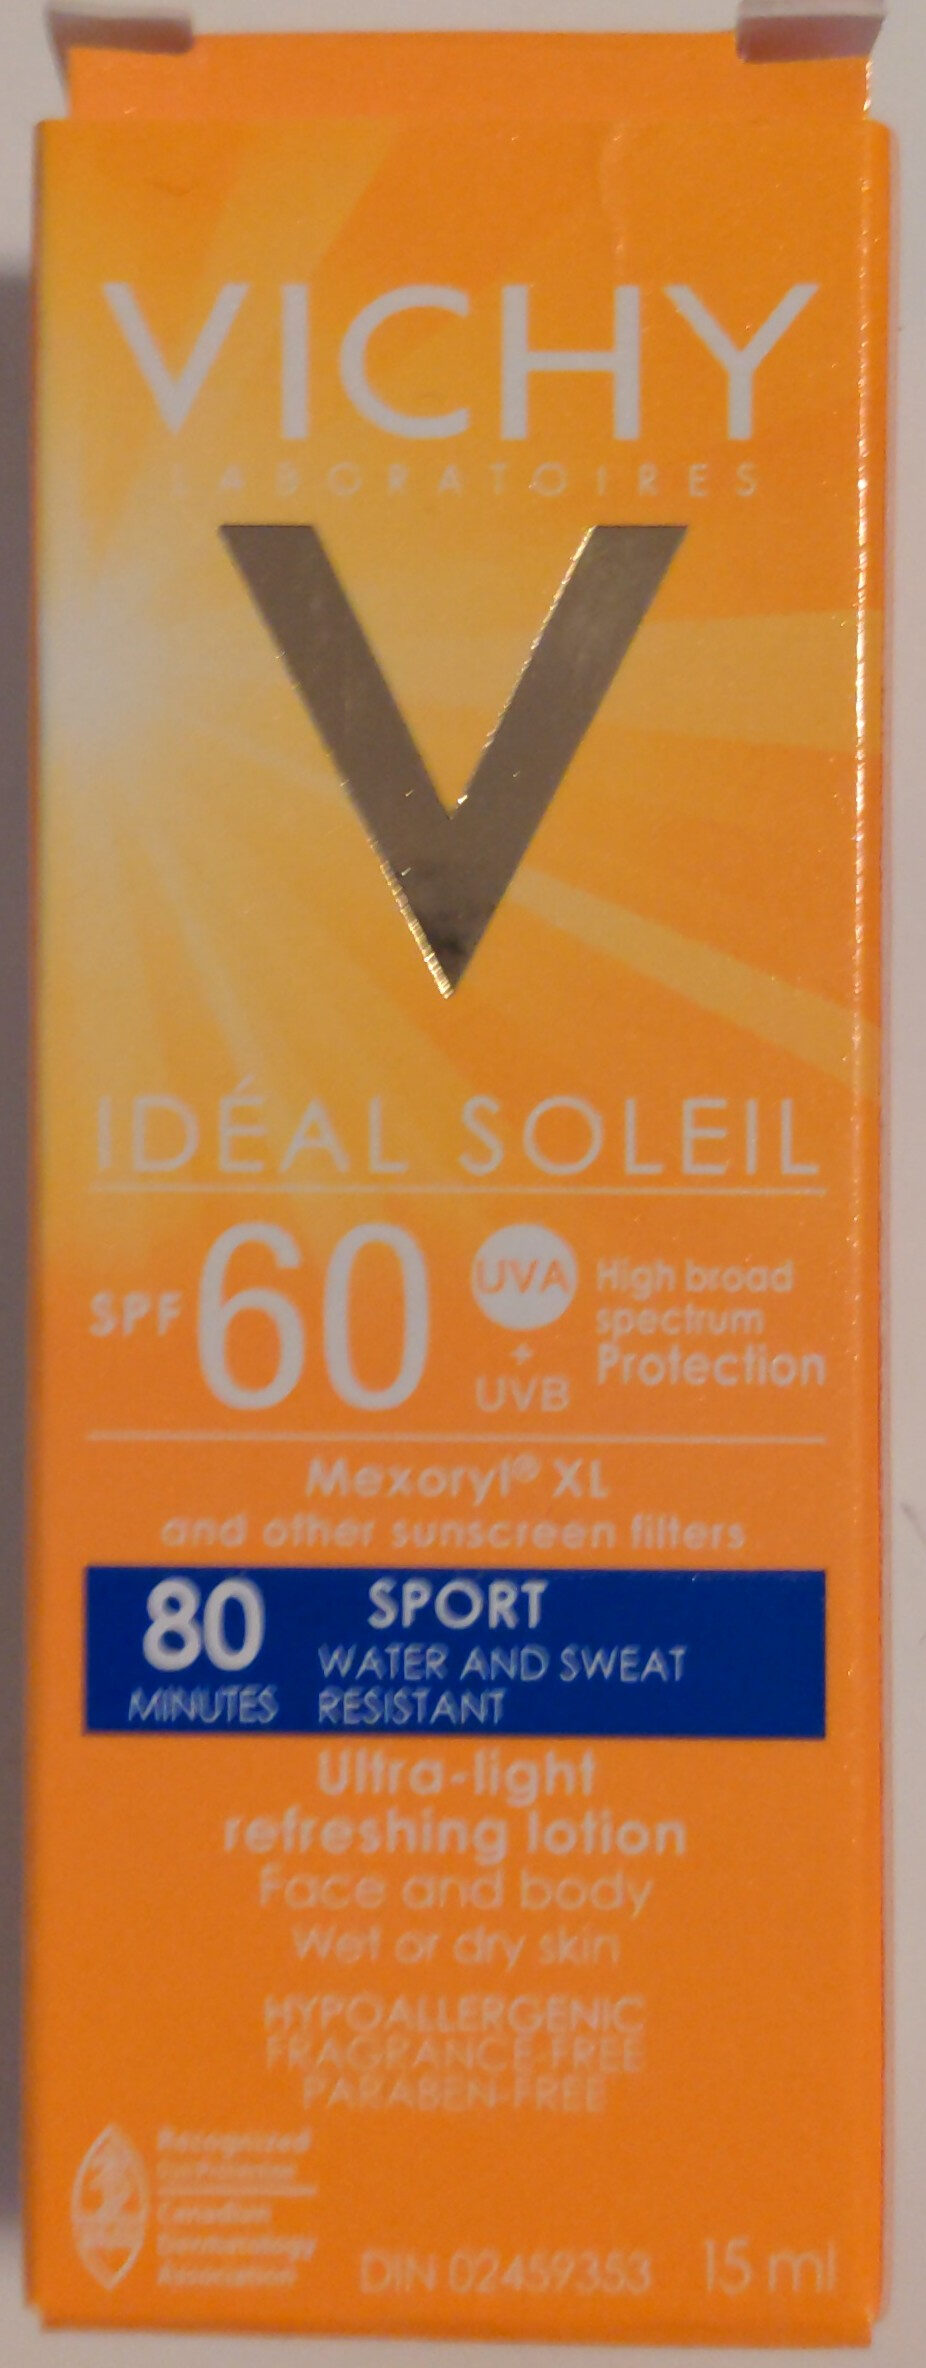 Idéal Soleil SPF 60 - Produit - fr